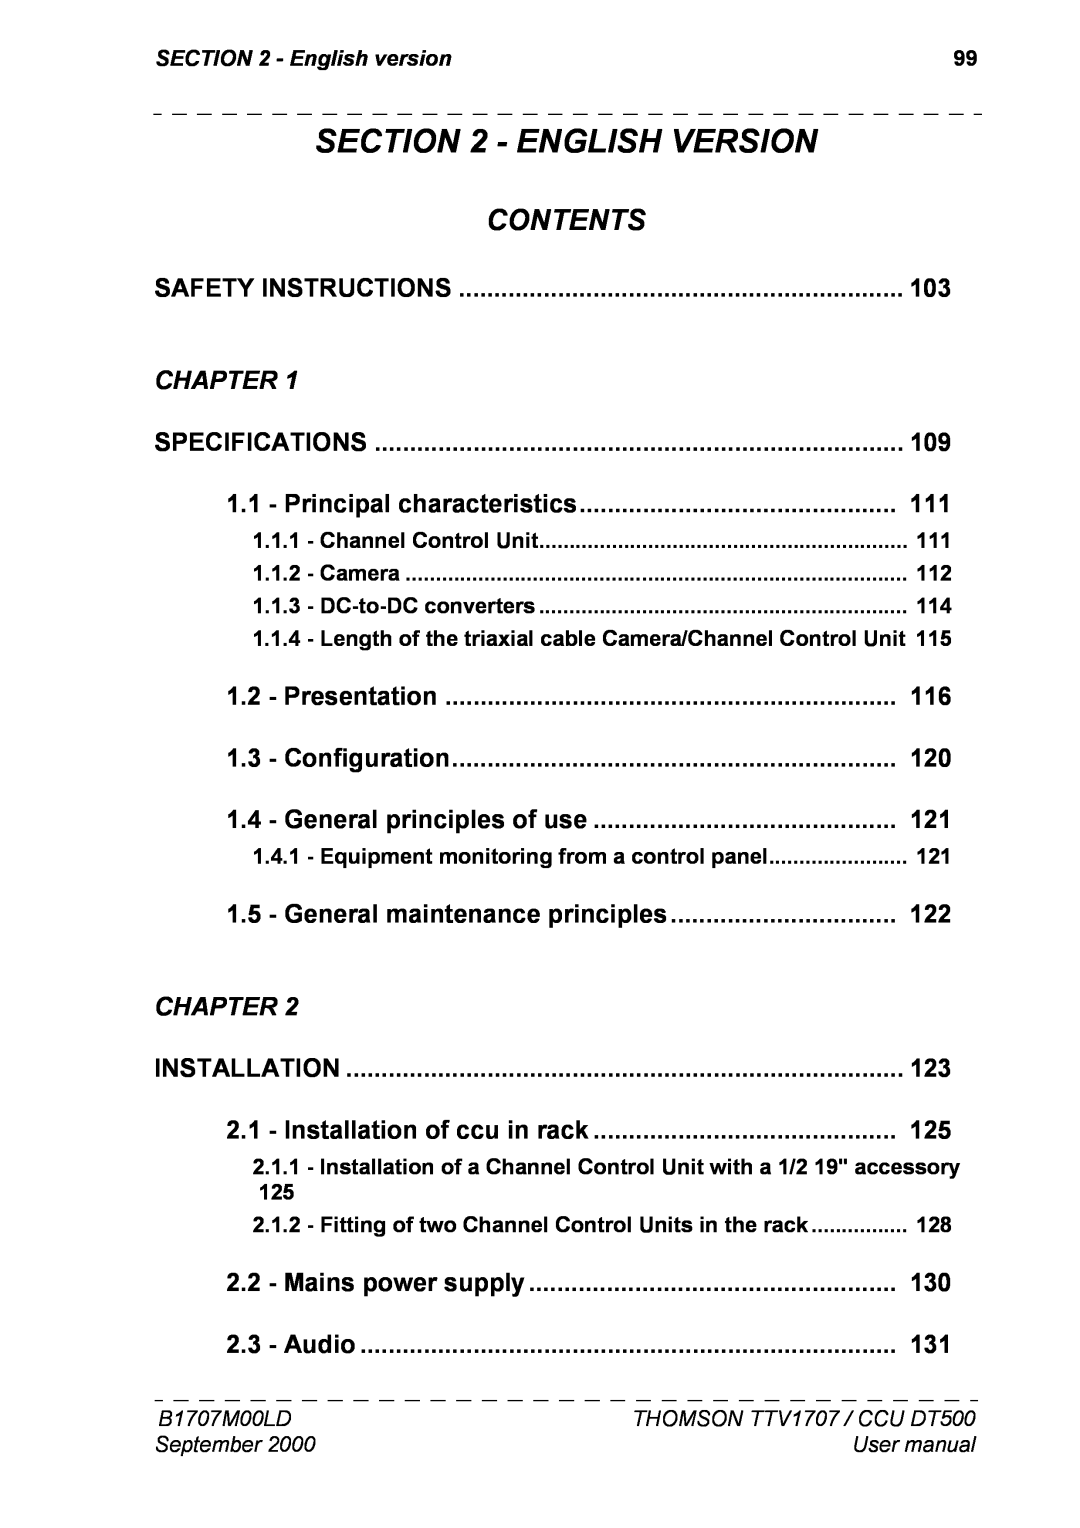 Technicolor - Thomson CAMERA TTV 1707, CCU DT 500 manuel dutilisation Contents, English Version, Chapter, English version 